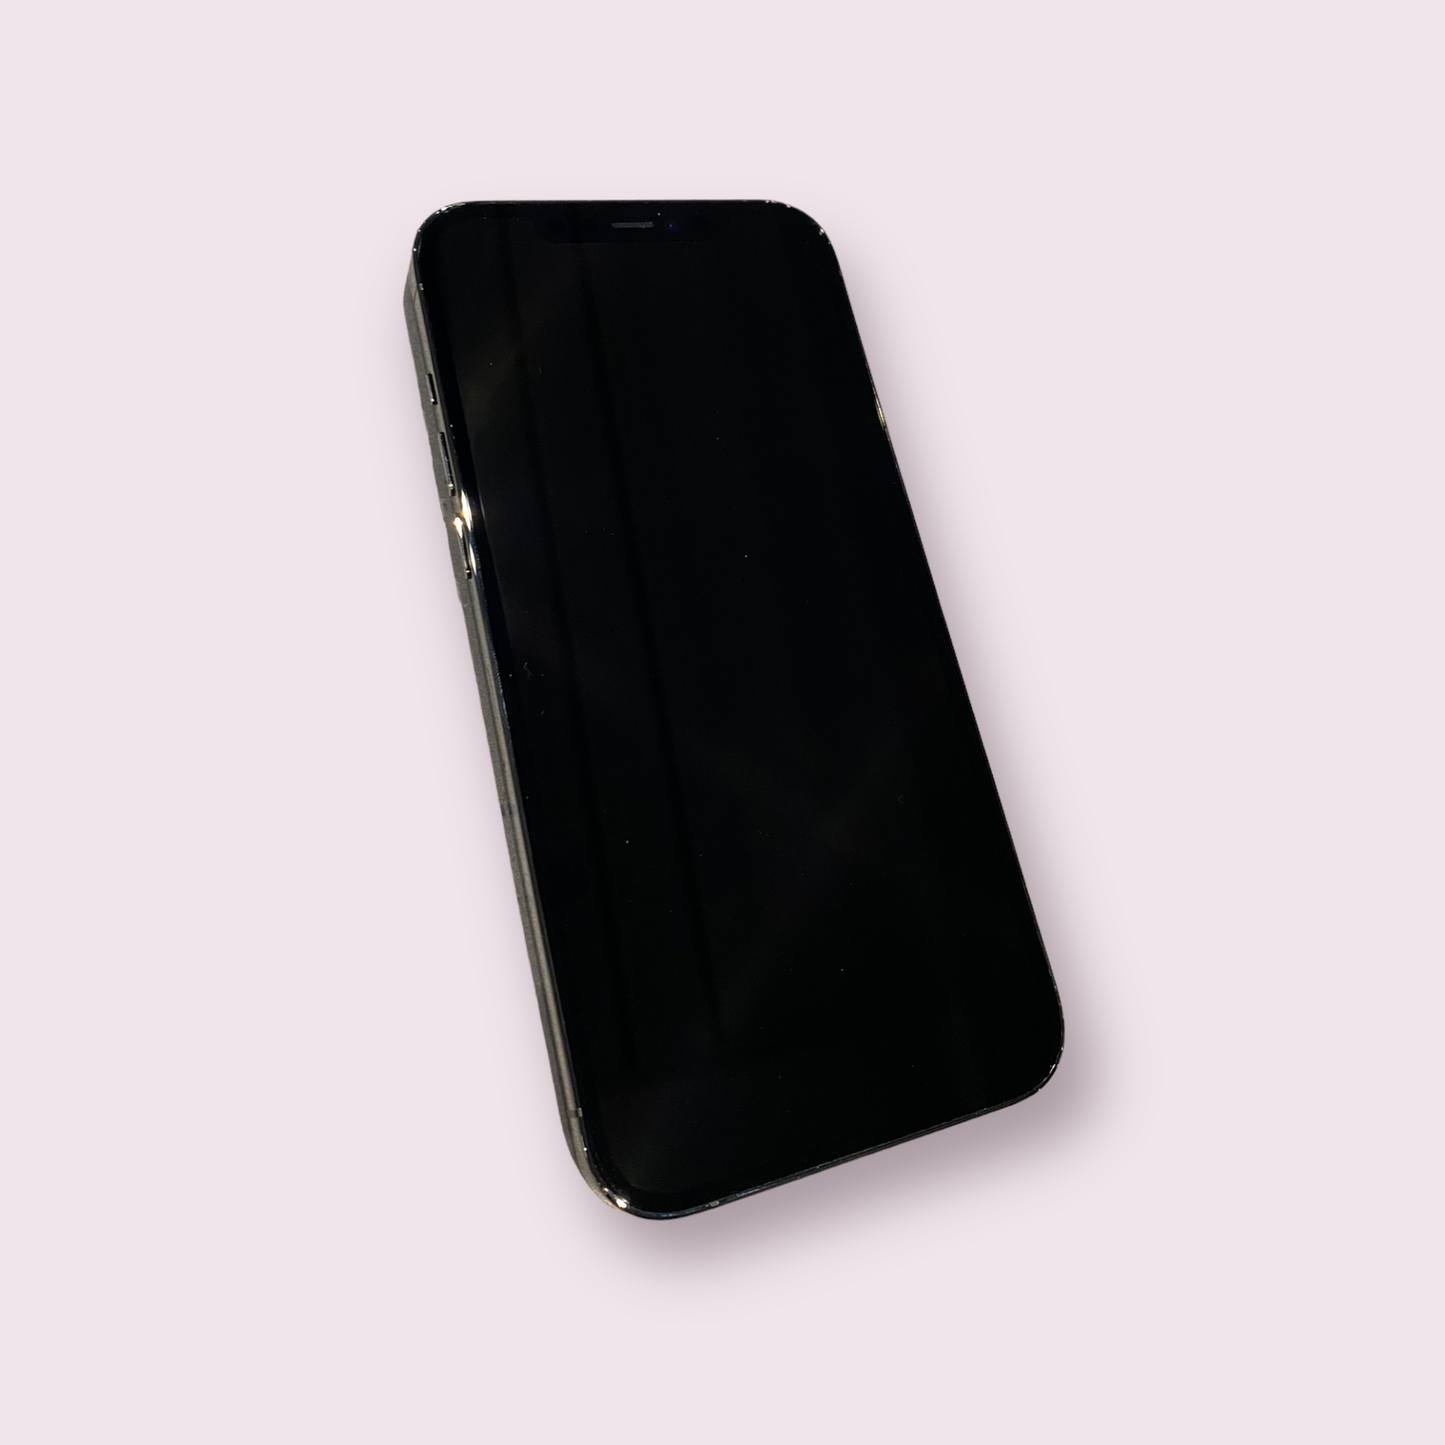 Apple iPhone 12 Pro Max 512GB Graphite - Unlocked - Grade A